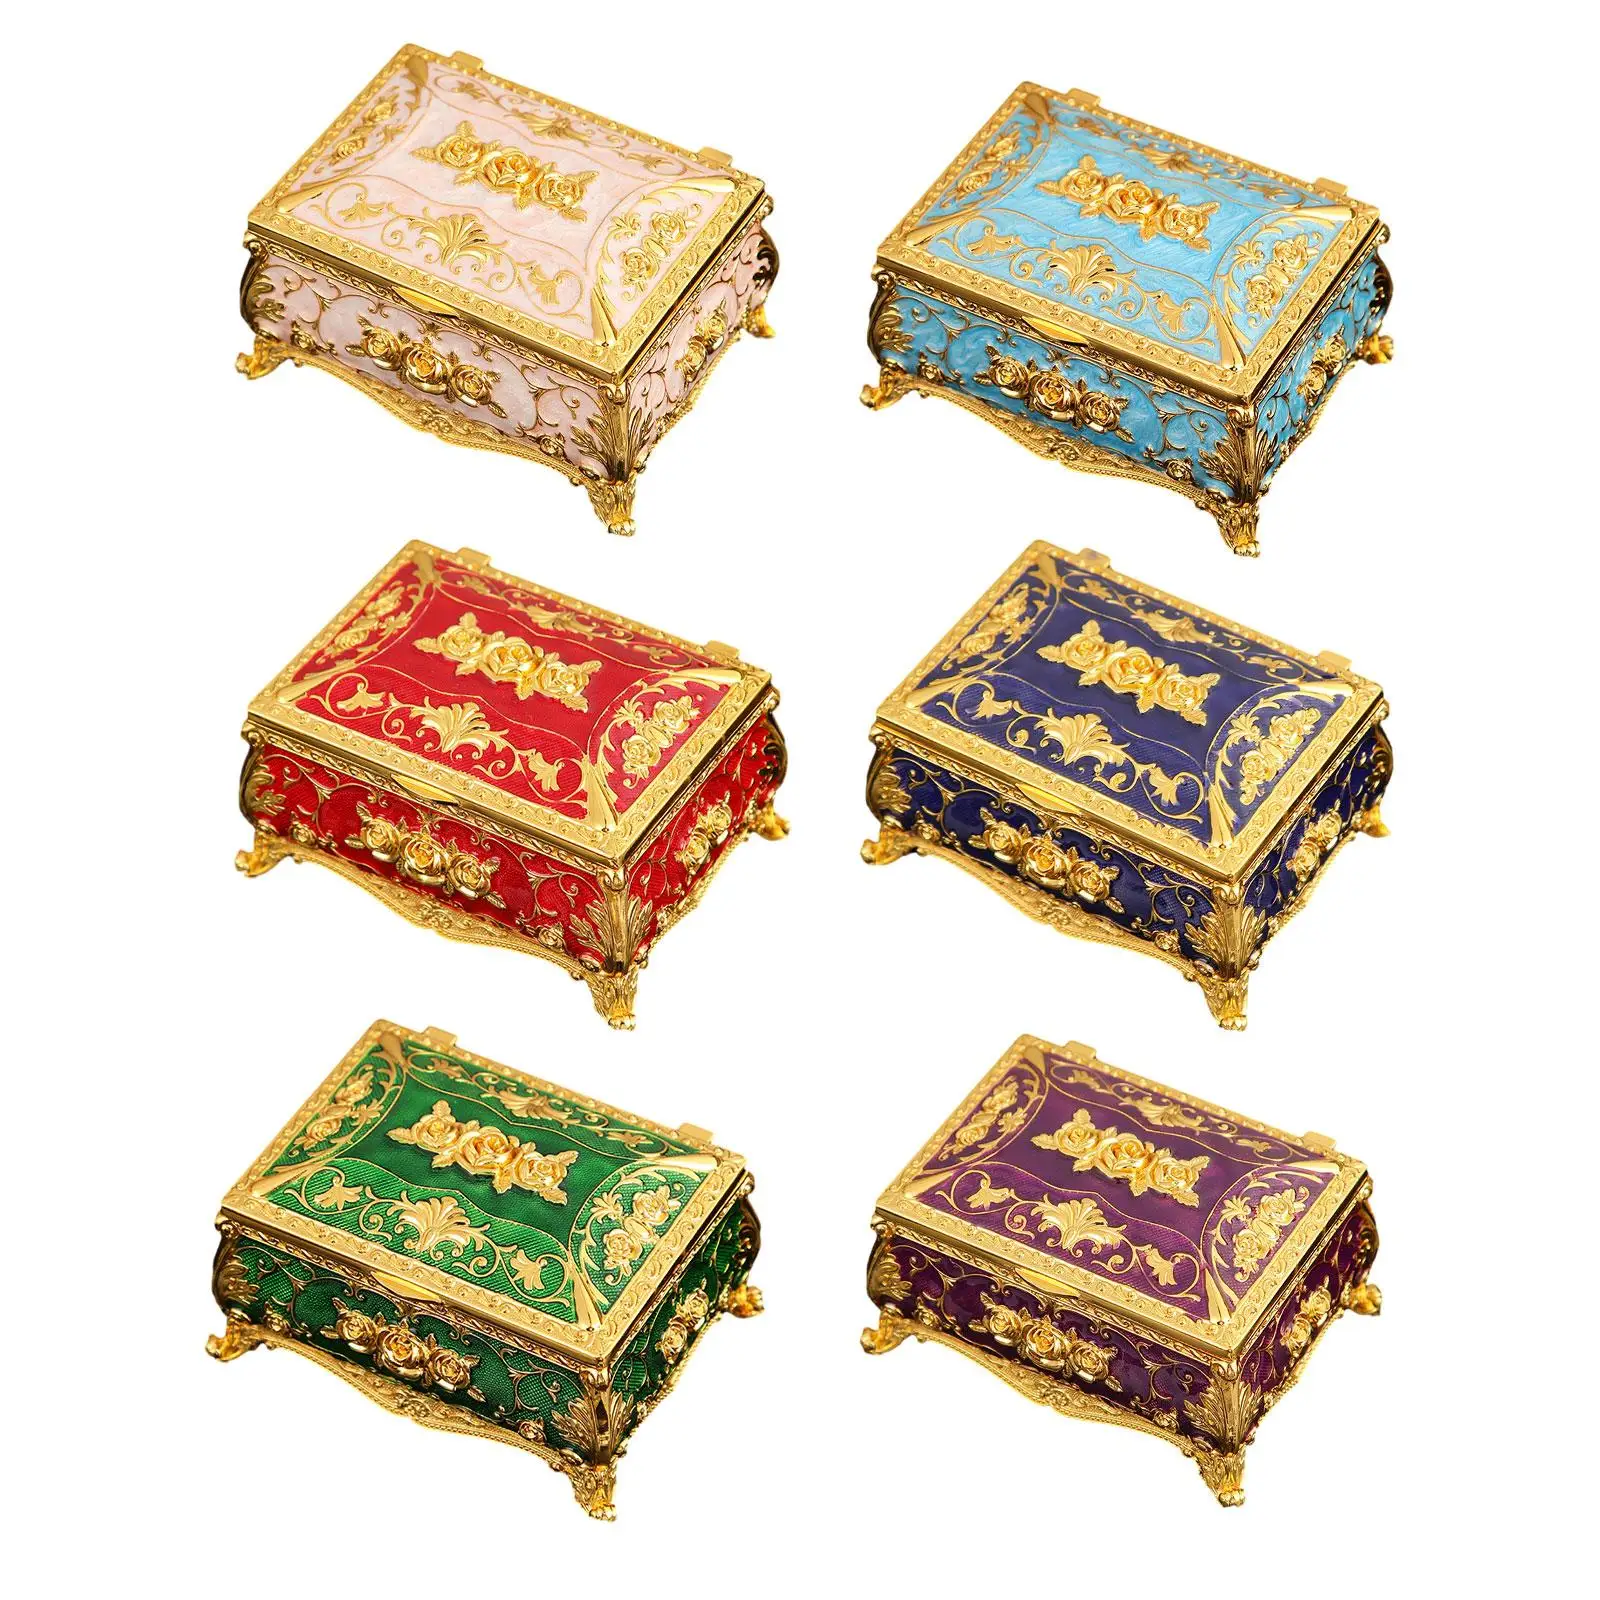 

Trinket Box Hand Painted for Women Treasure Chest Box Decorative Enameled Jewelry Box Keepsake Box for Earrings Rings Gift Idea